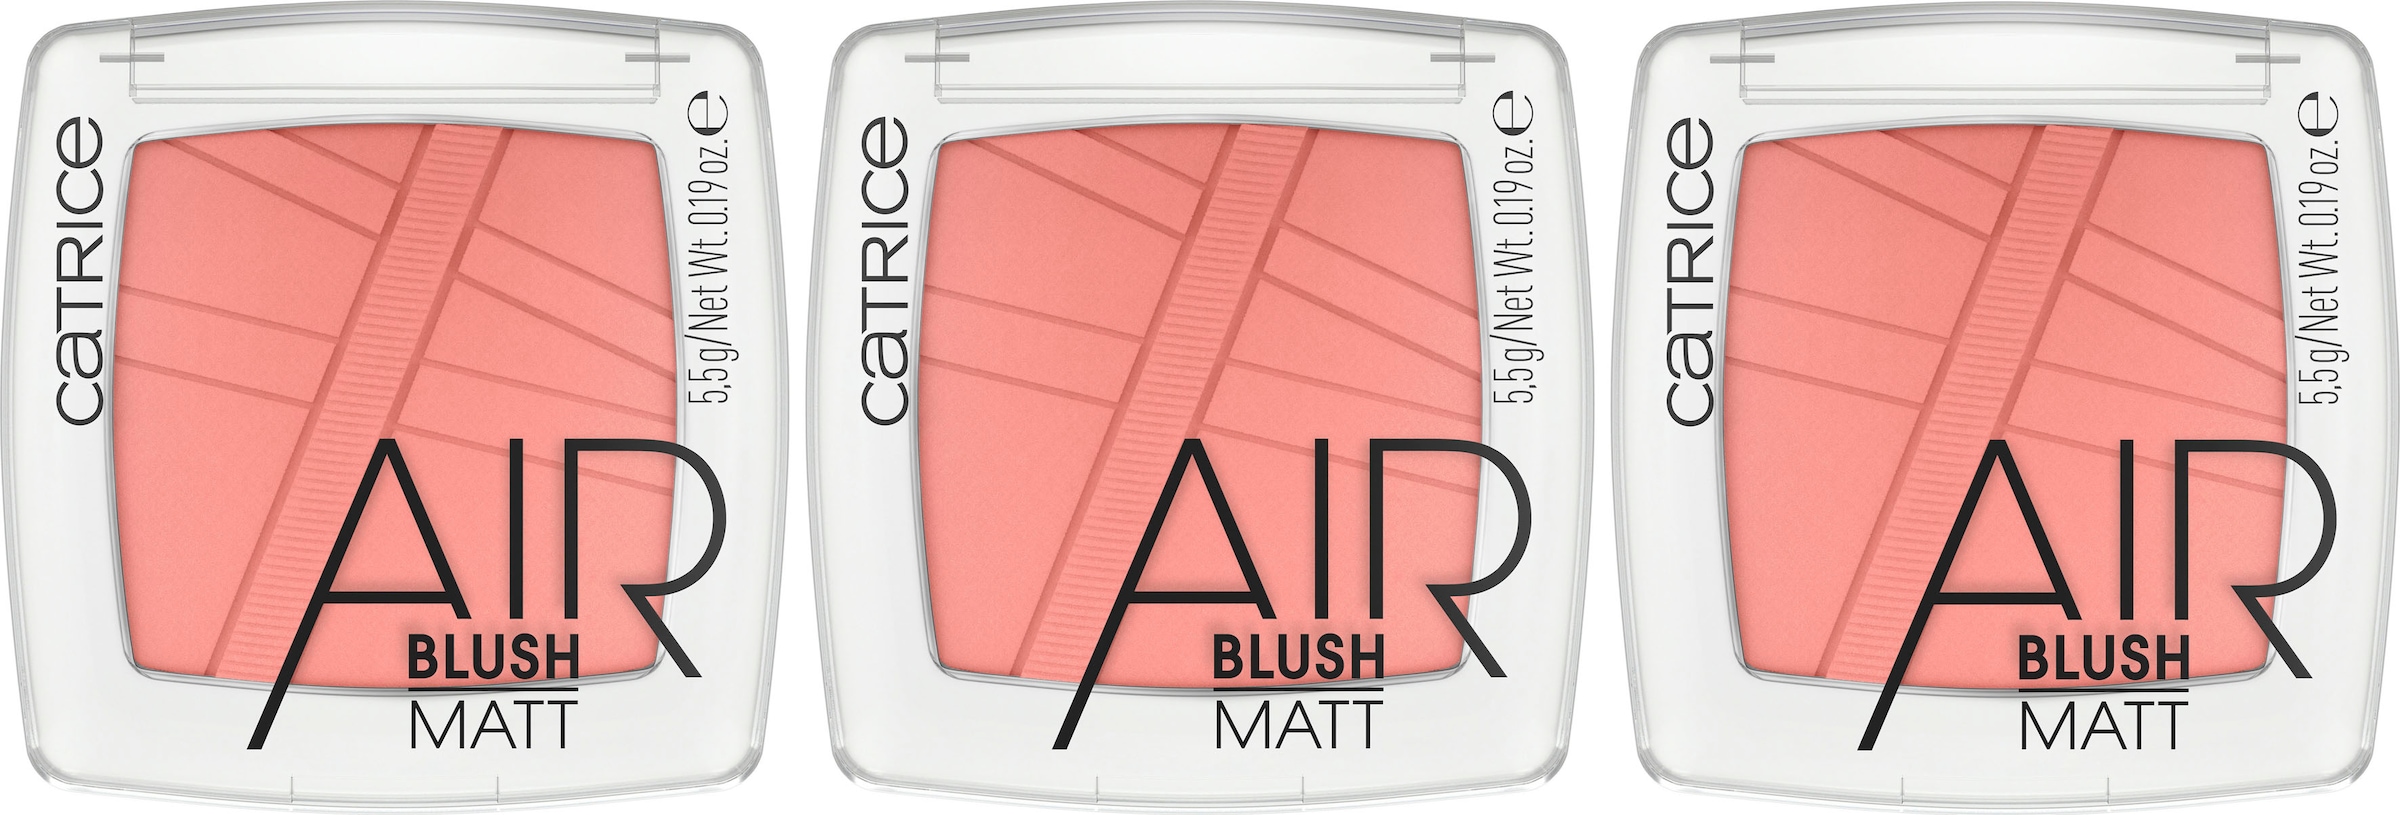 Catrice Rouge »AirBlush Matt« (Set 3 tlg.)